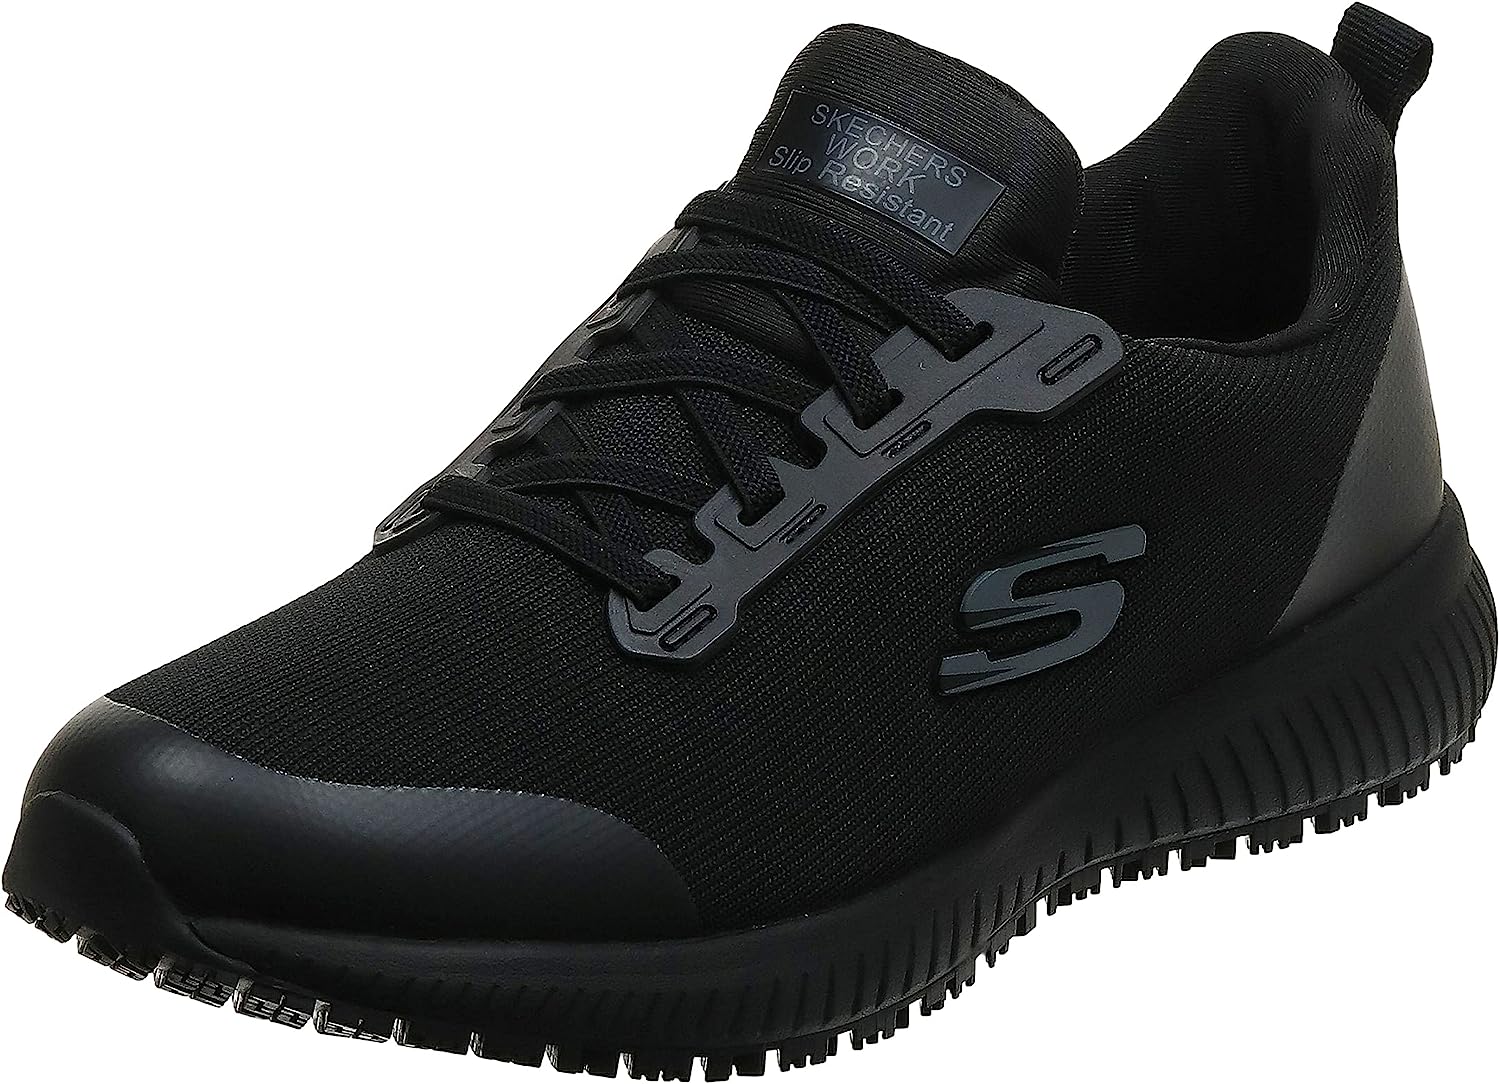 skechers work shoes product comparison